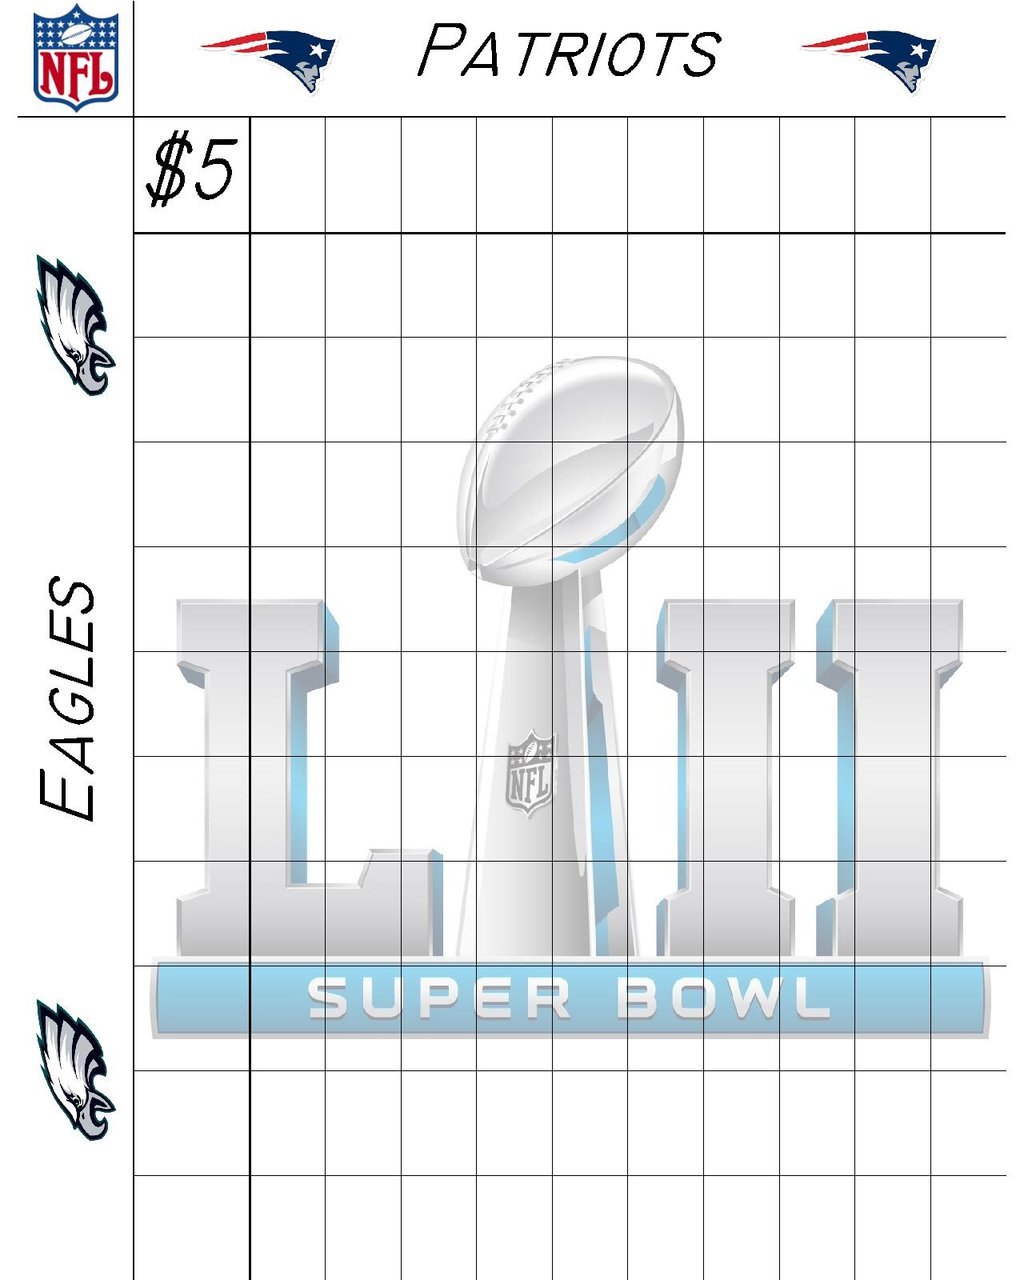 $5 Super Bowl Squares.jpg